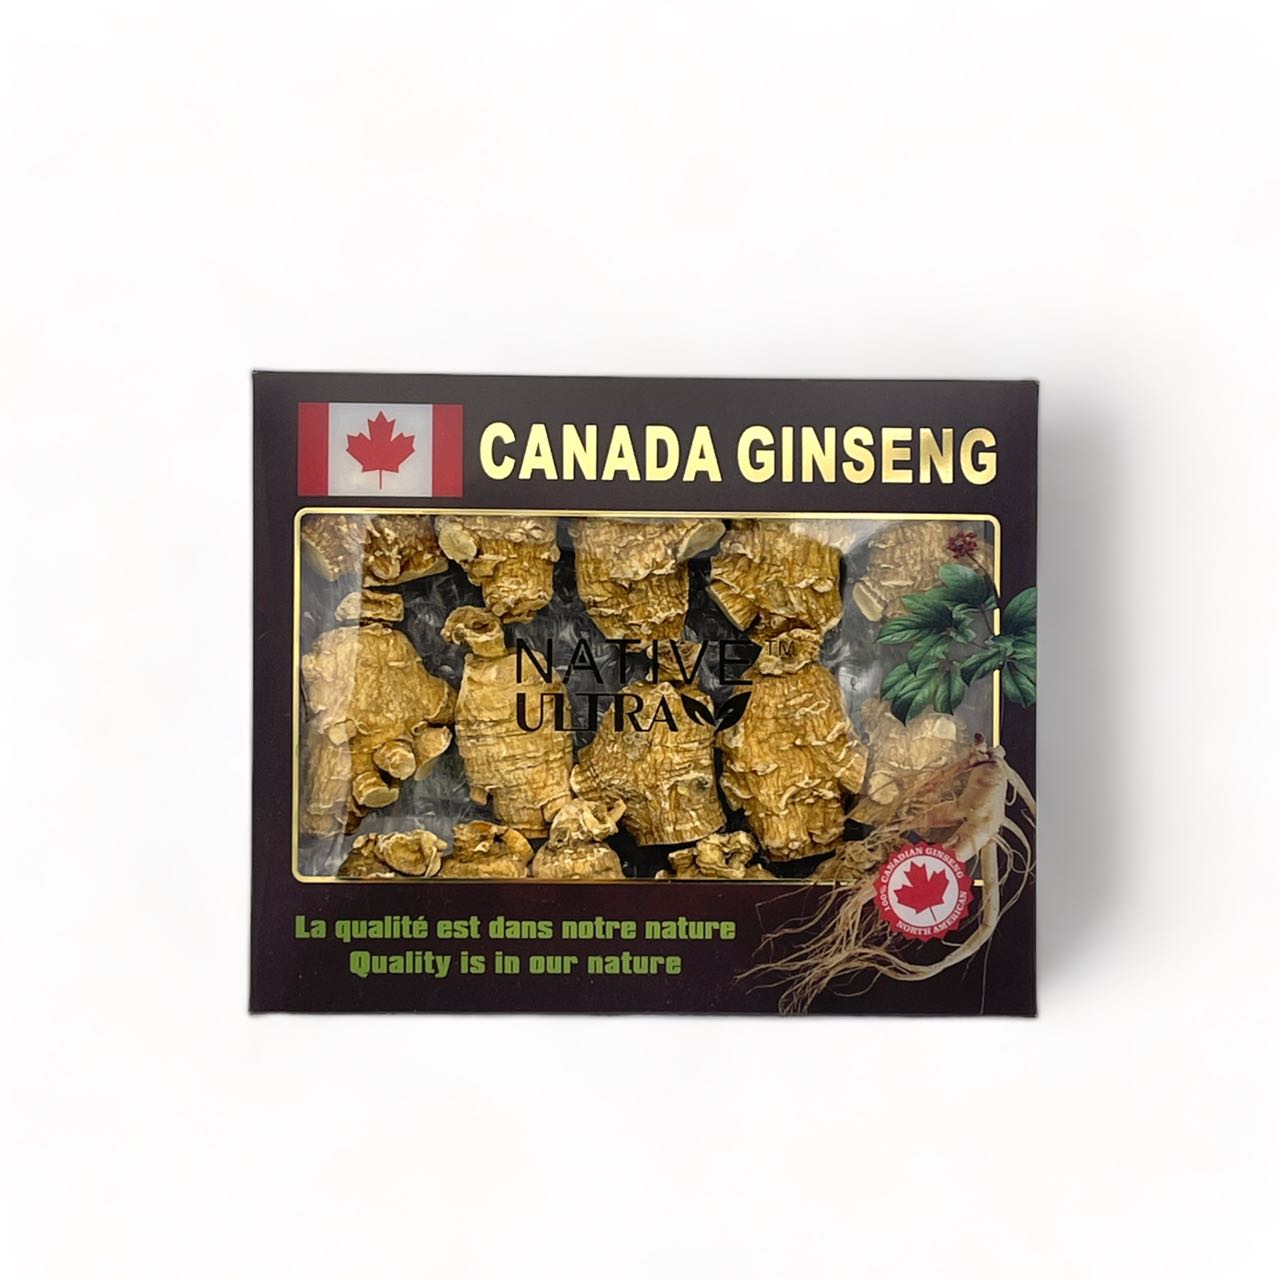 "NATIVE ULTRA" Ginseng Canadien Premium (10g/morceau), 150g/boîte